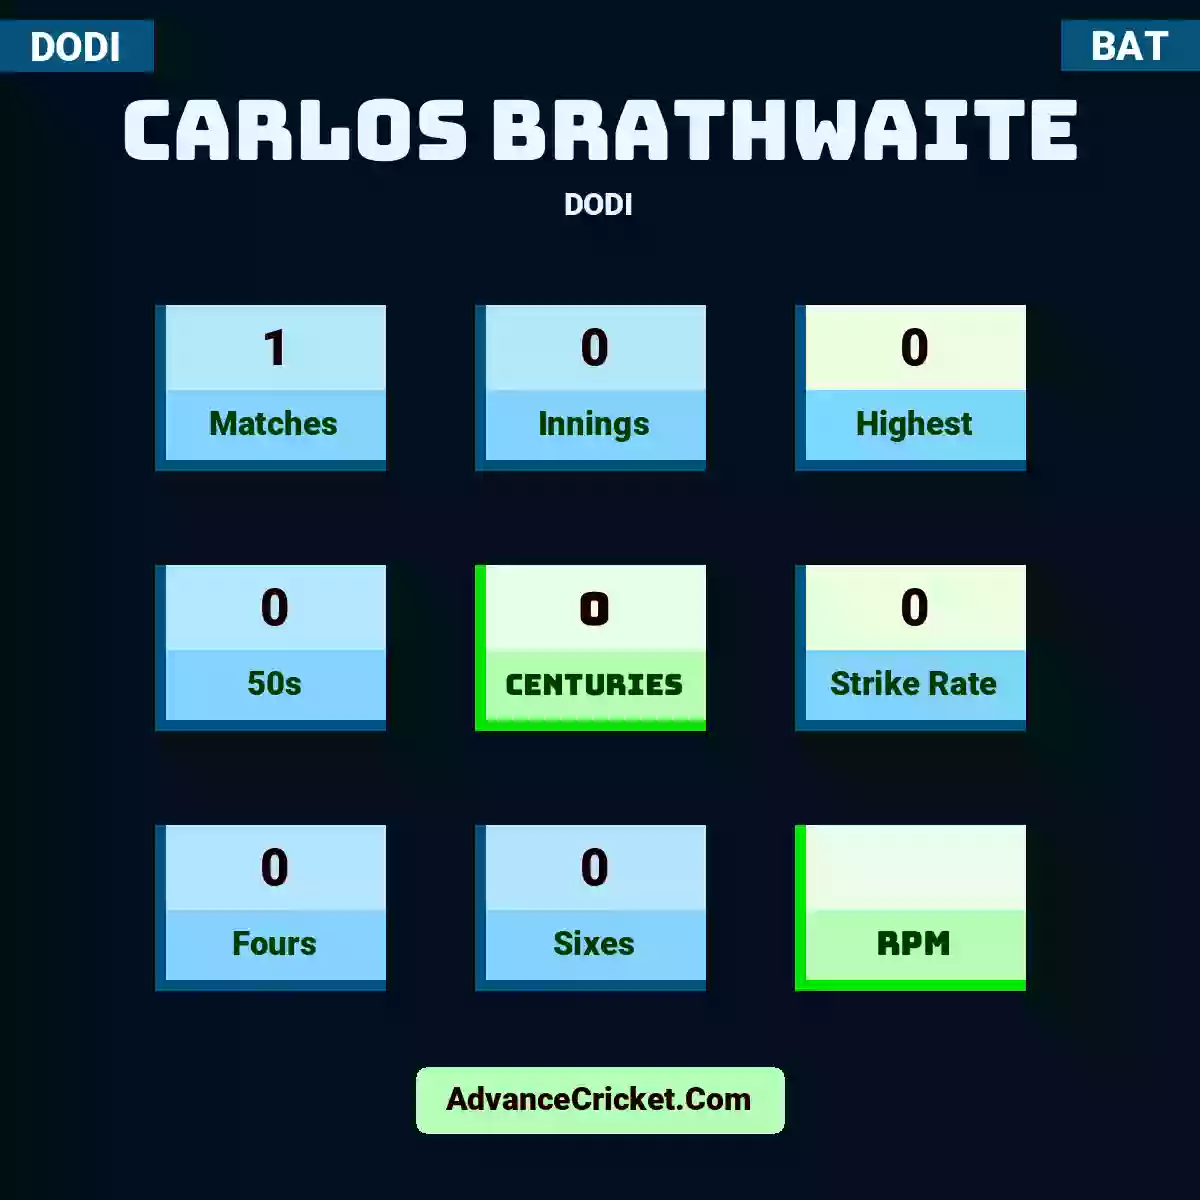 Carlos Brathwaite DODI , Carlos Brathwaite played 1 matches, scored 0 runs as highest, 0 half-centuries, and 0 centuries, with a strike rate of 0. C.Brathwaite hit 0 fours and 0 sixes.